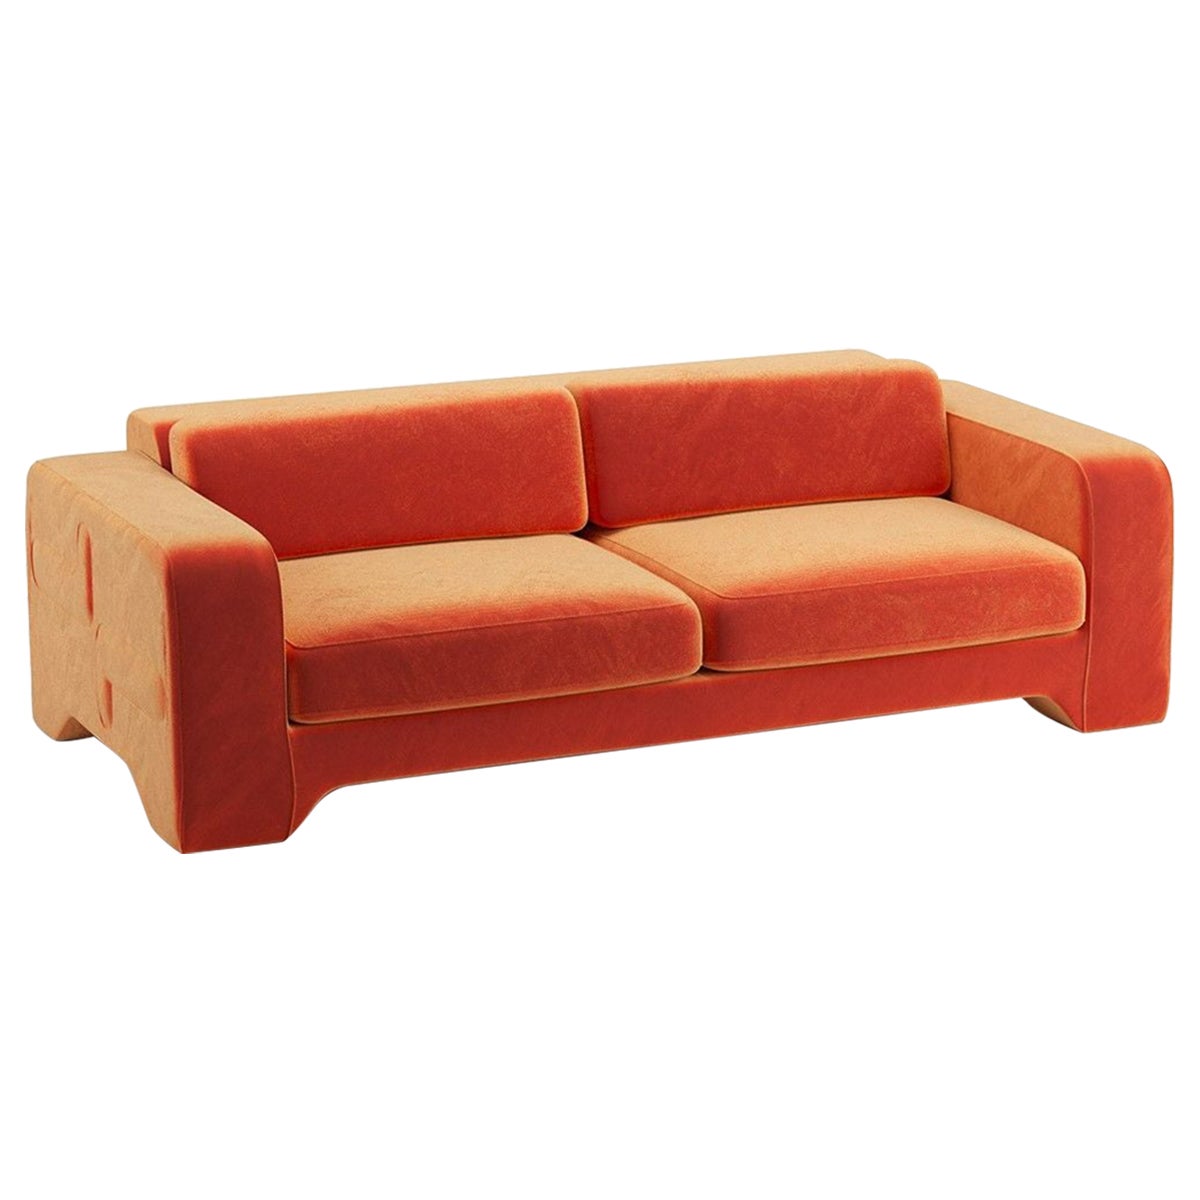 Popus Editions Giovanna 3 Seater Sofa in Orange Verone Velvet Upholstery